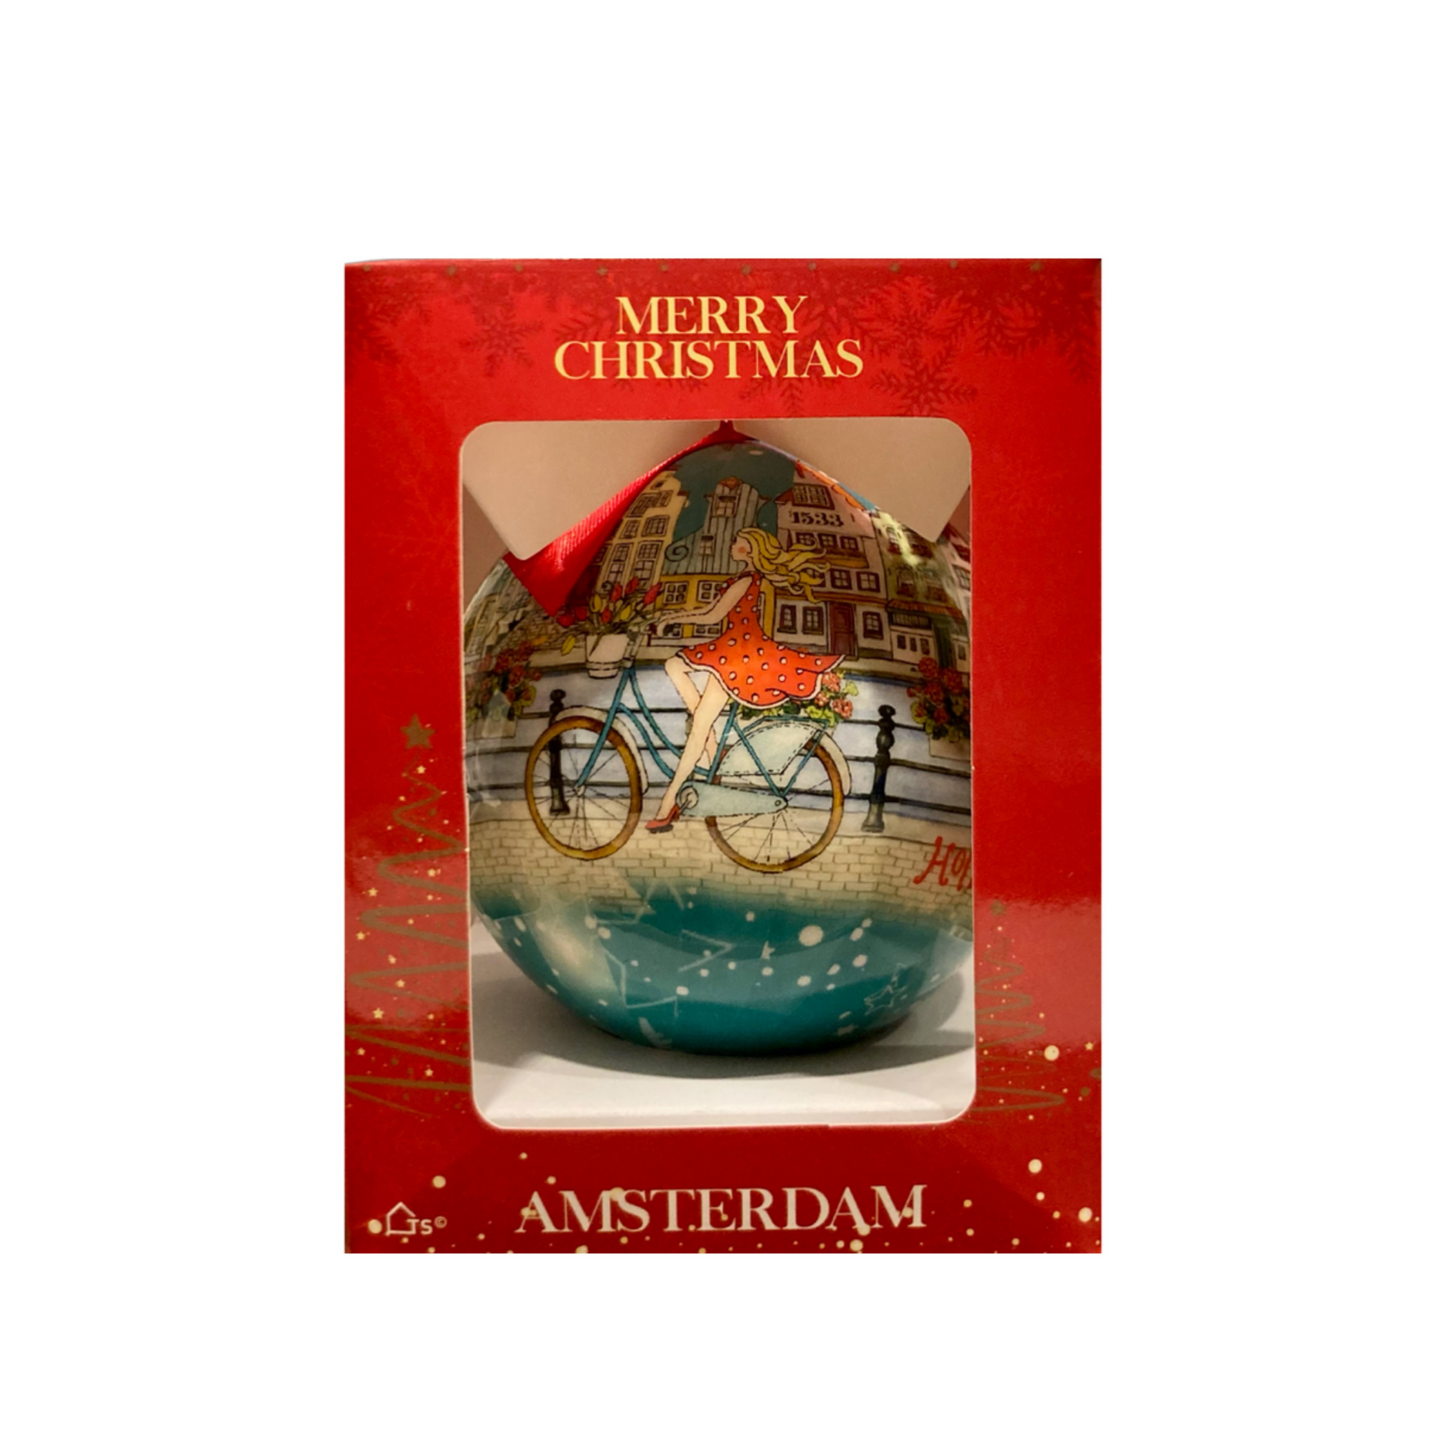 holland gift box fiets rood cadeau idee leuk kado meisje op de fiets op de amsterdamse grachten in nederland hoofdstad kerst ornament kerstbal grote kerstbal kerstmis